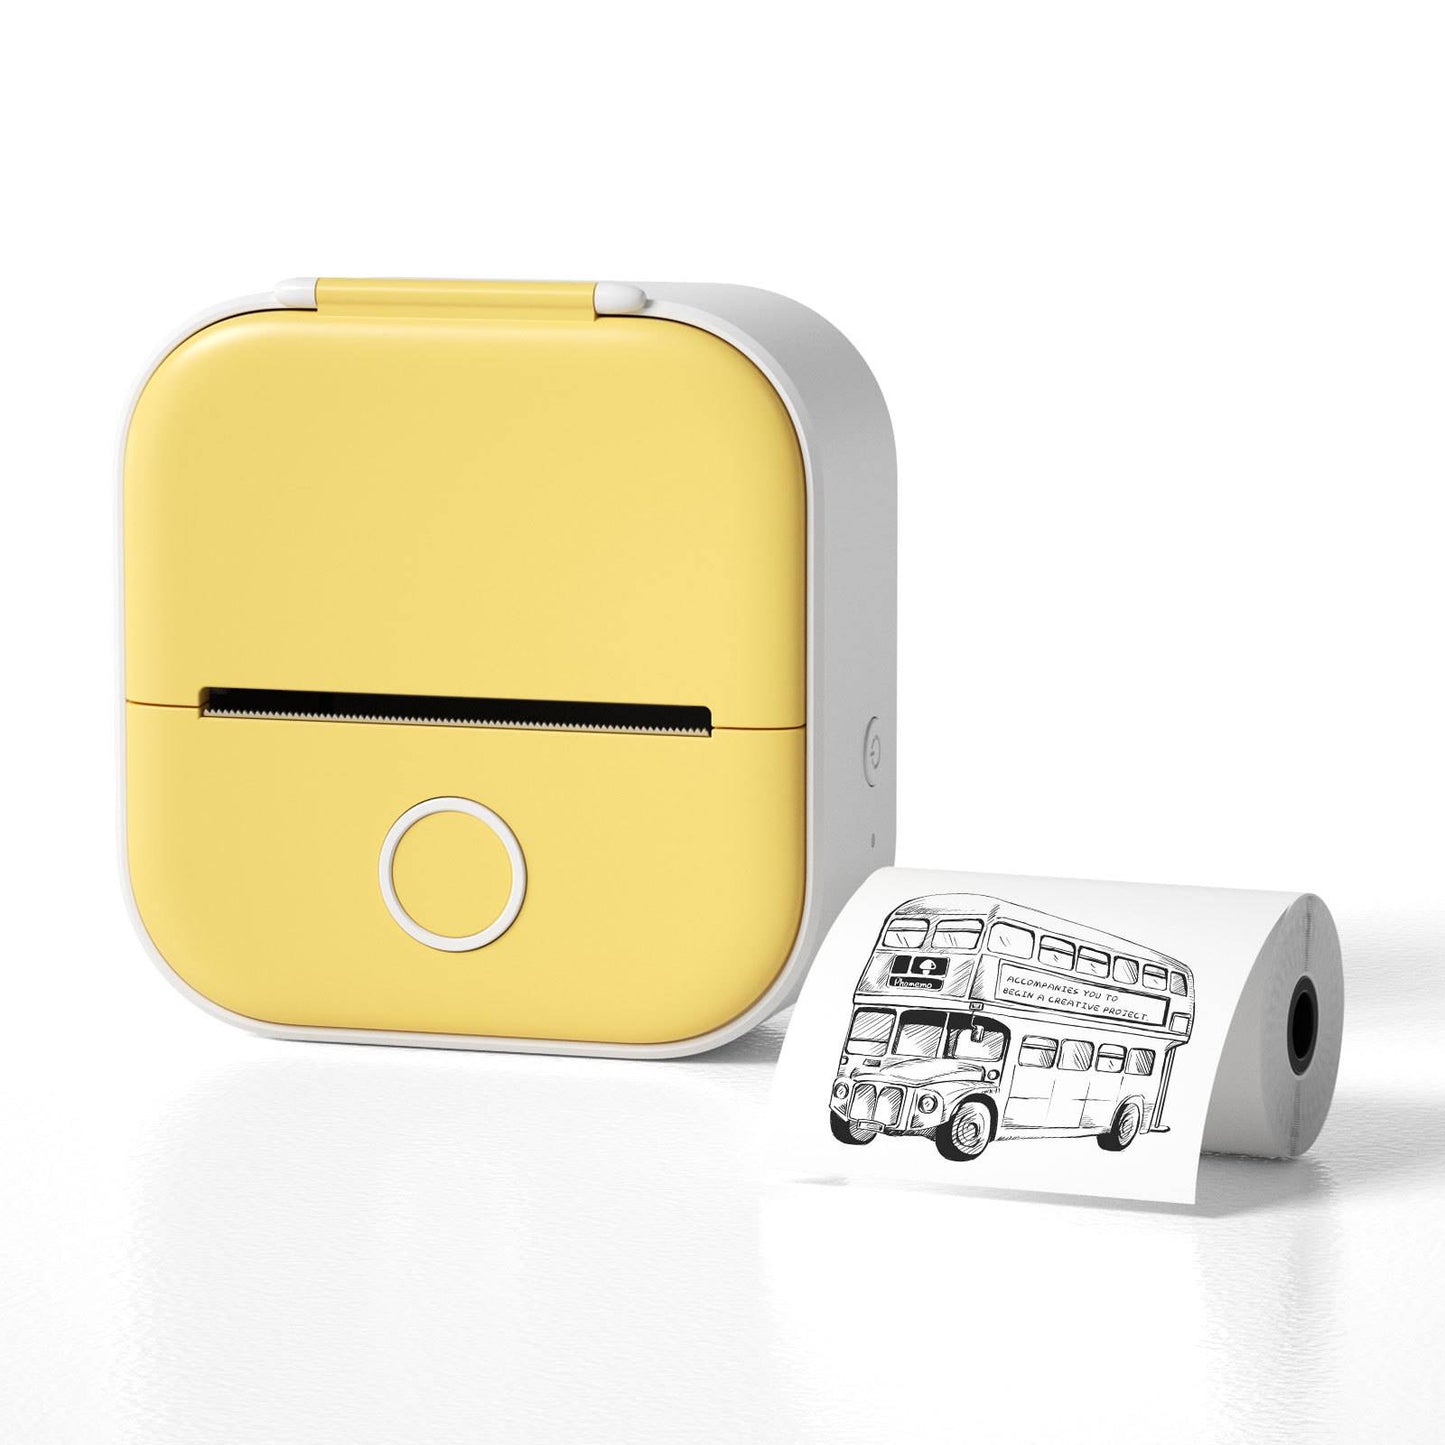 Mini Pocket Small Portable Printer For Home Use